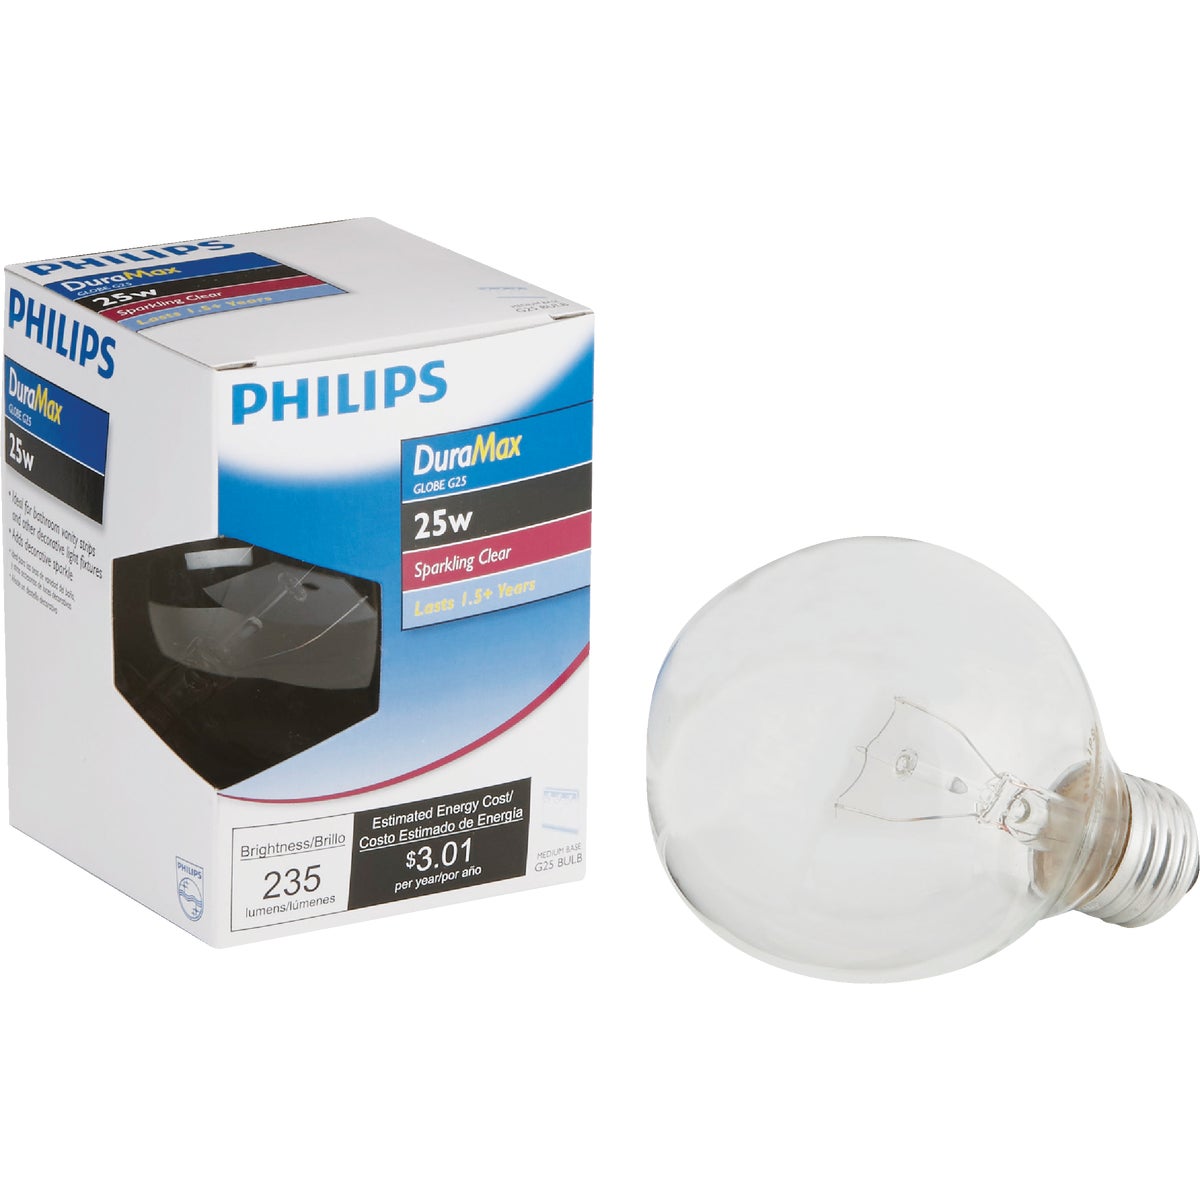 Philips DuraMax 25W Clear Medium G25 Incandescent Globe Light Bulb